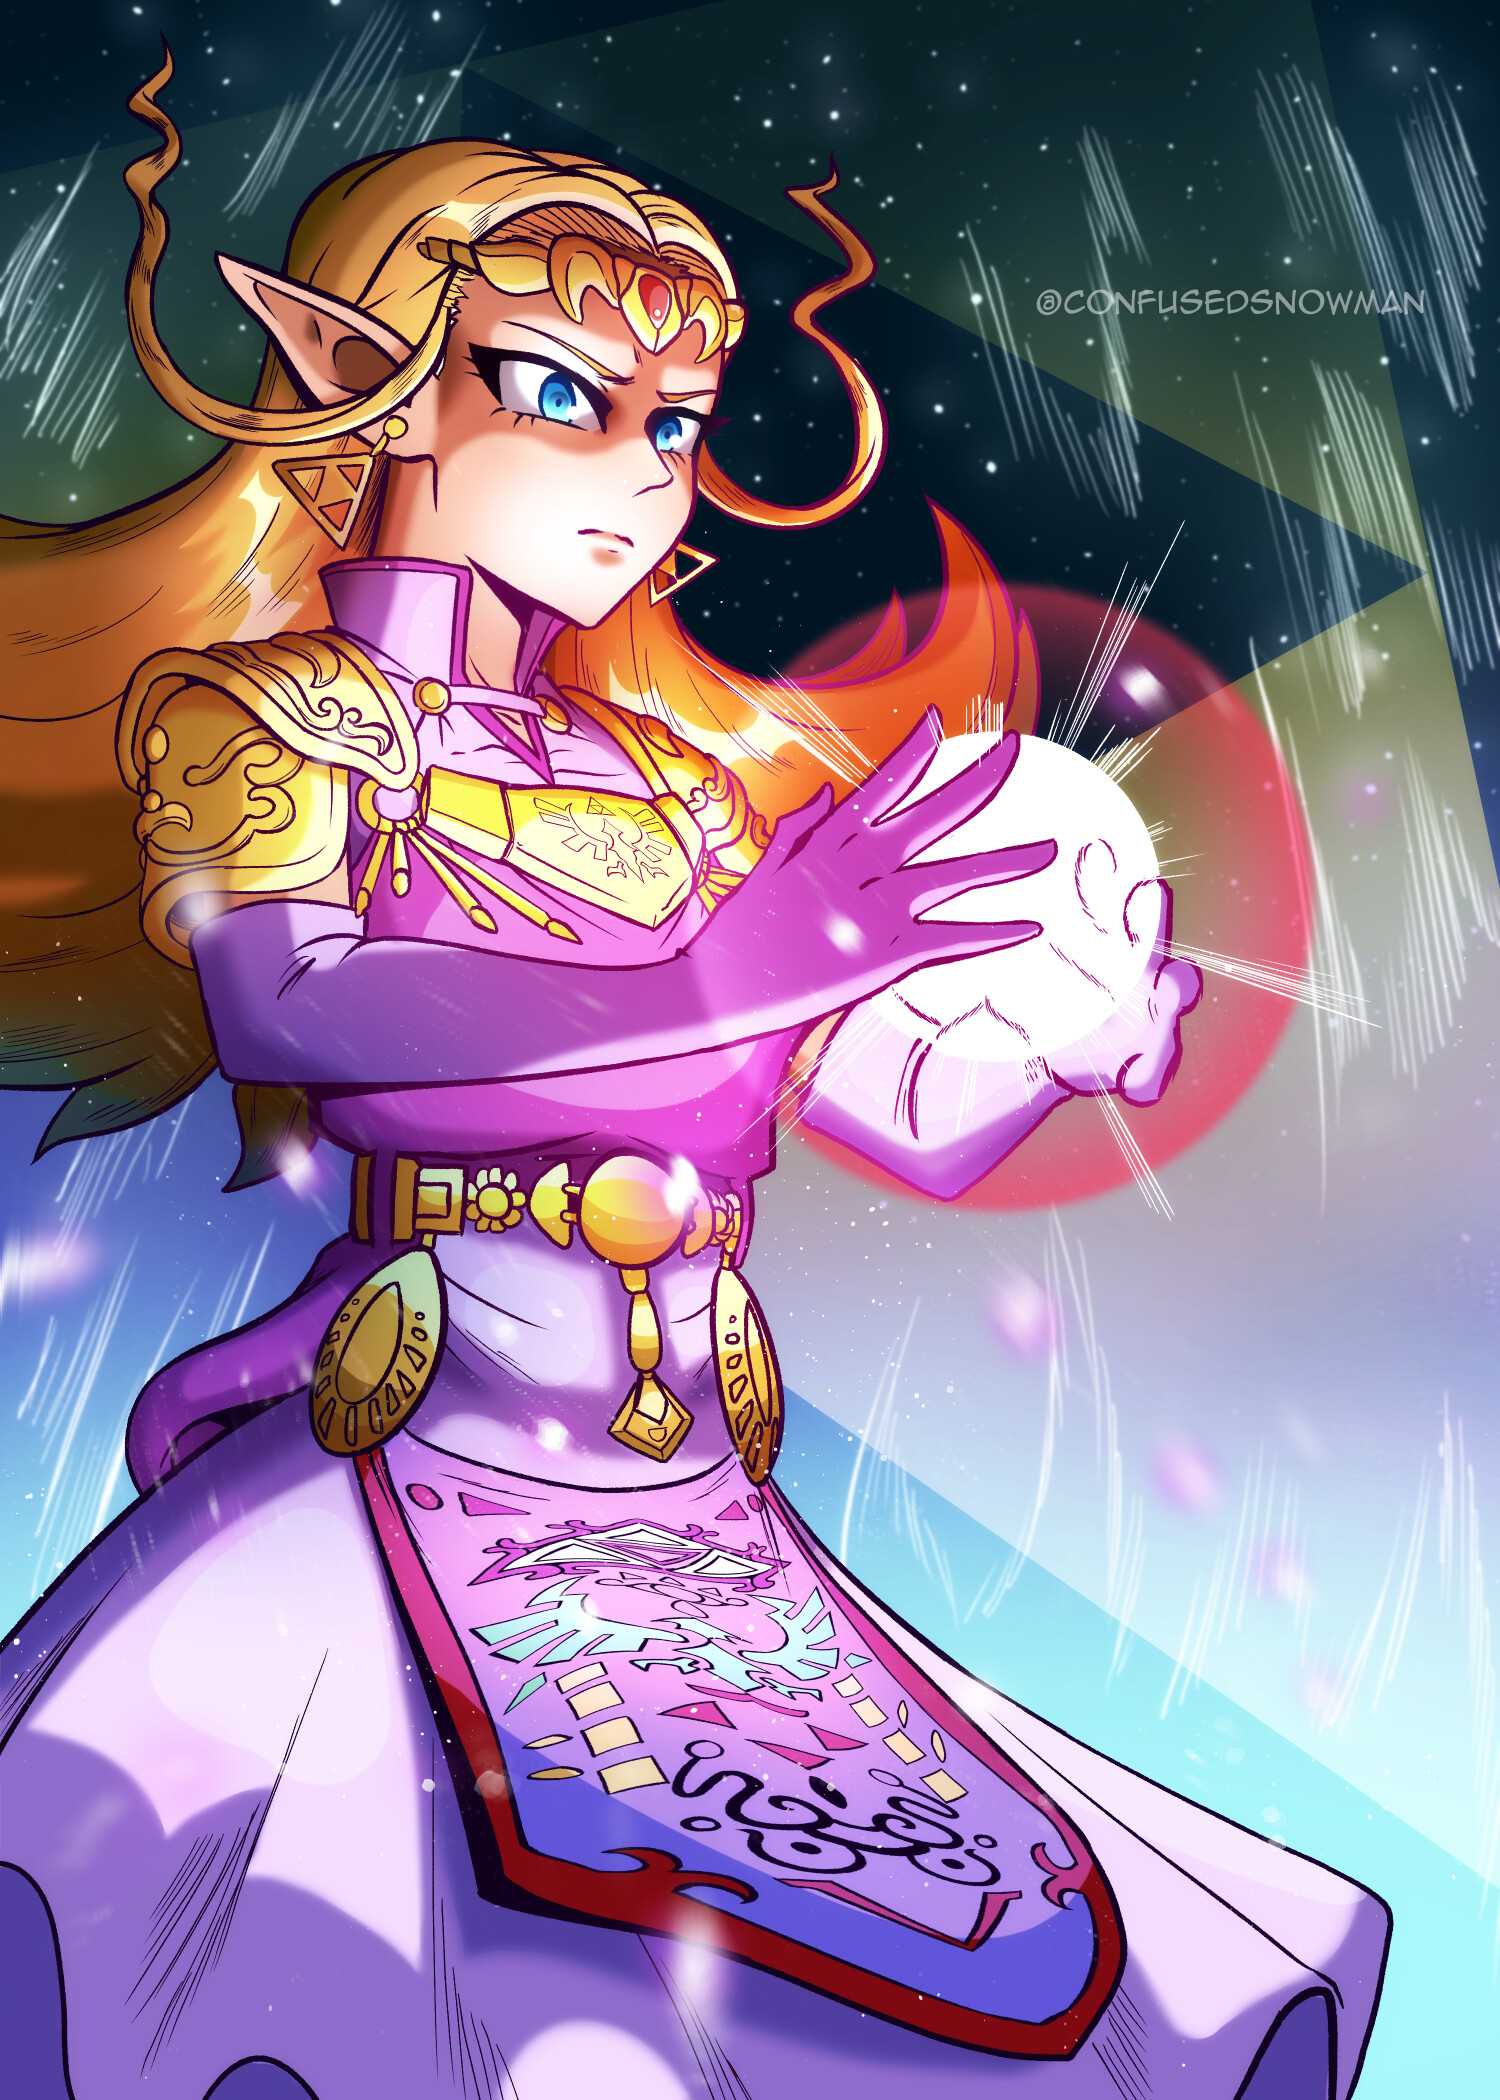 ArtStation - Princess Zelda - Ocarina of Time